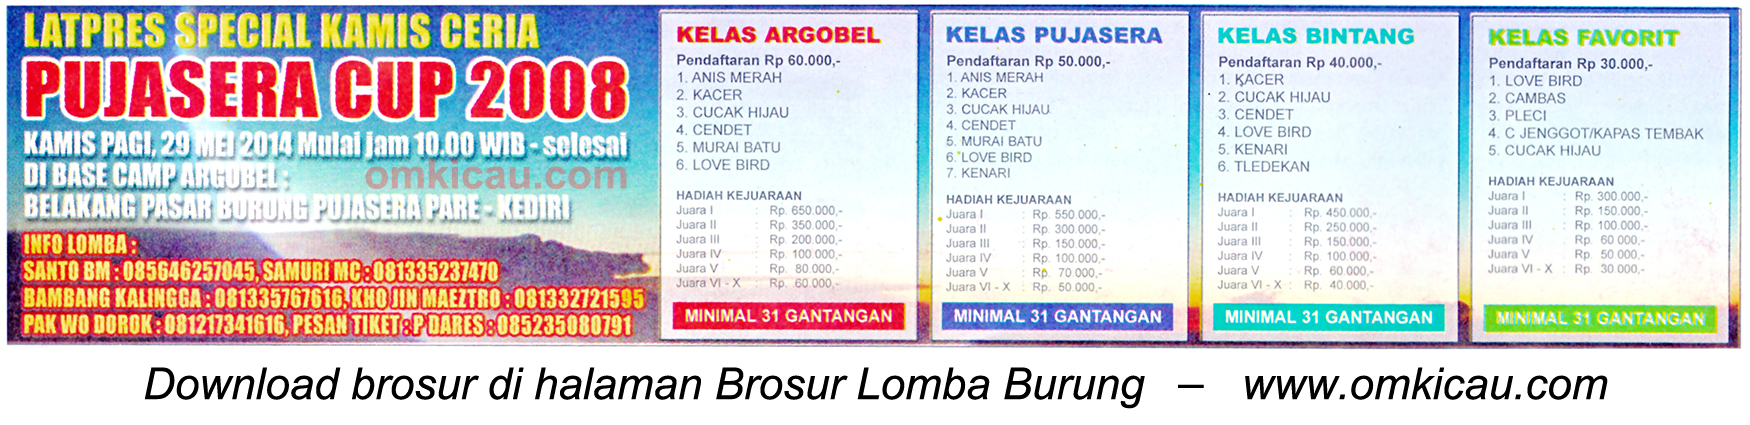 Brosur Latpres Special Kamis Ceria Pujasera Cup, Kediri, 29 Mei 2014